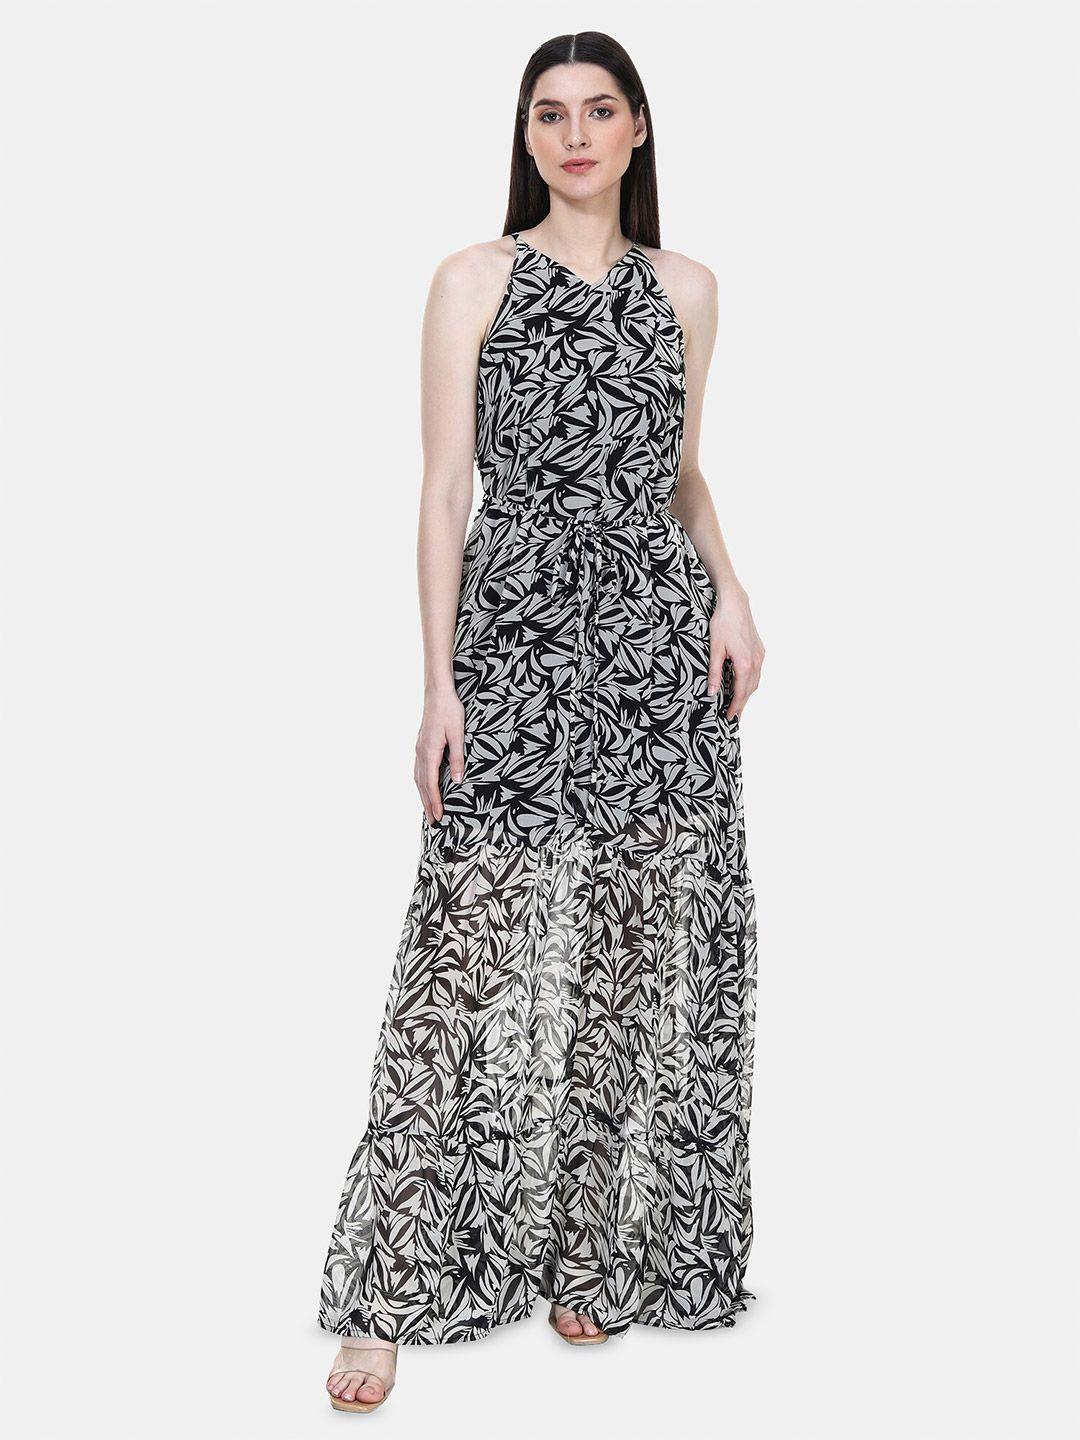 tsm black & white print halter neck layered georgette fit & flare sleeveless dress